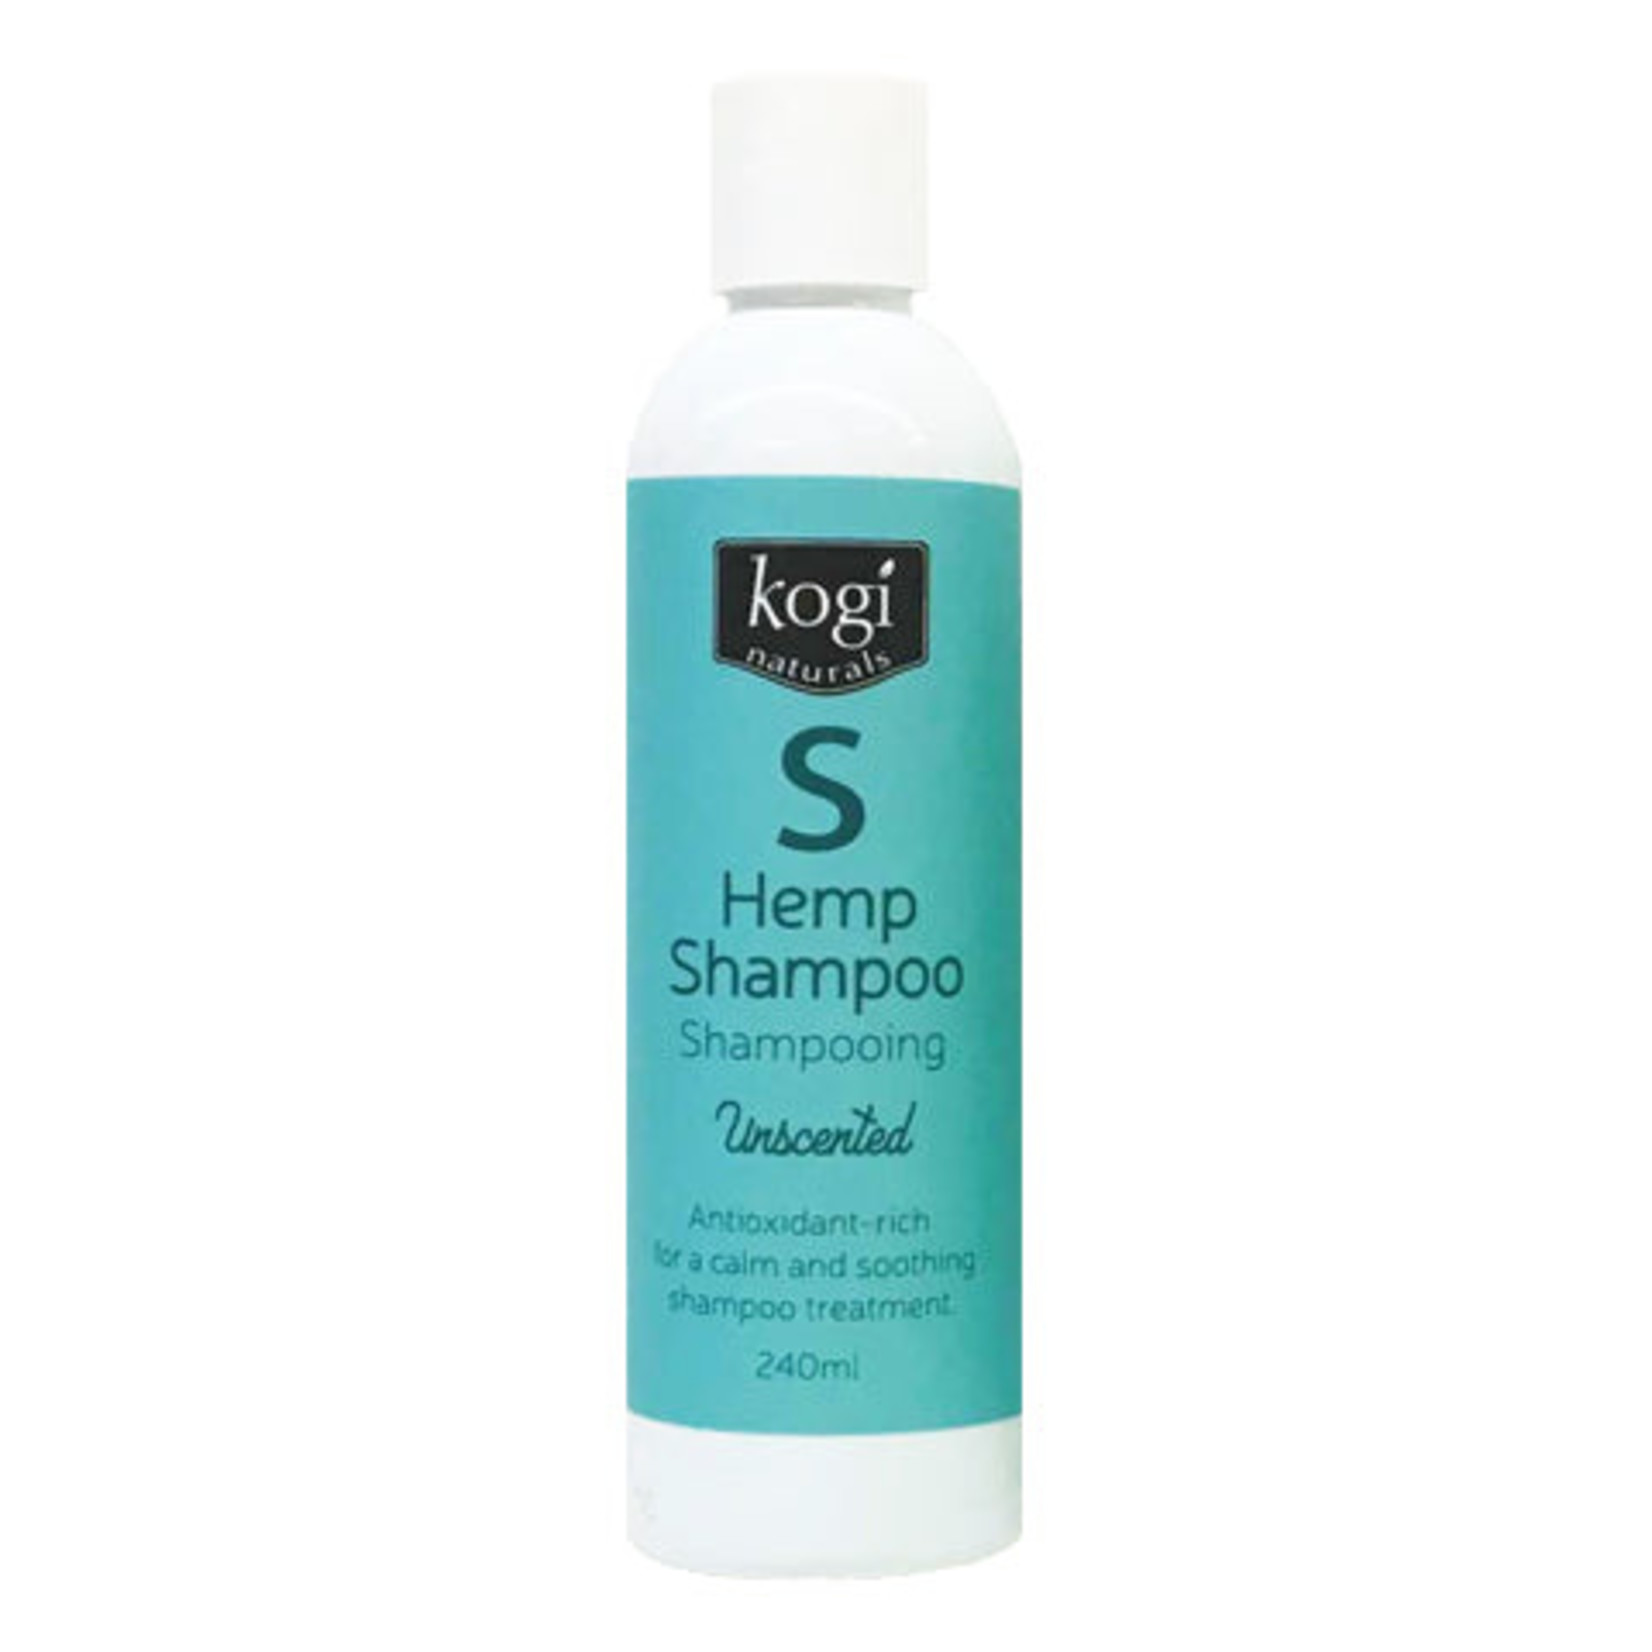 Kogi Naturals Hair Care 475mL Shampoo Unscented 240ml